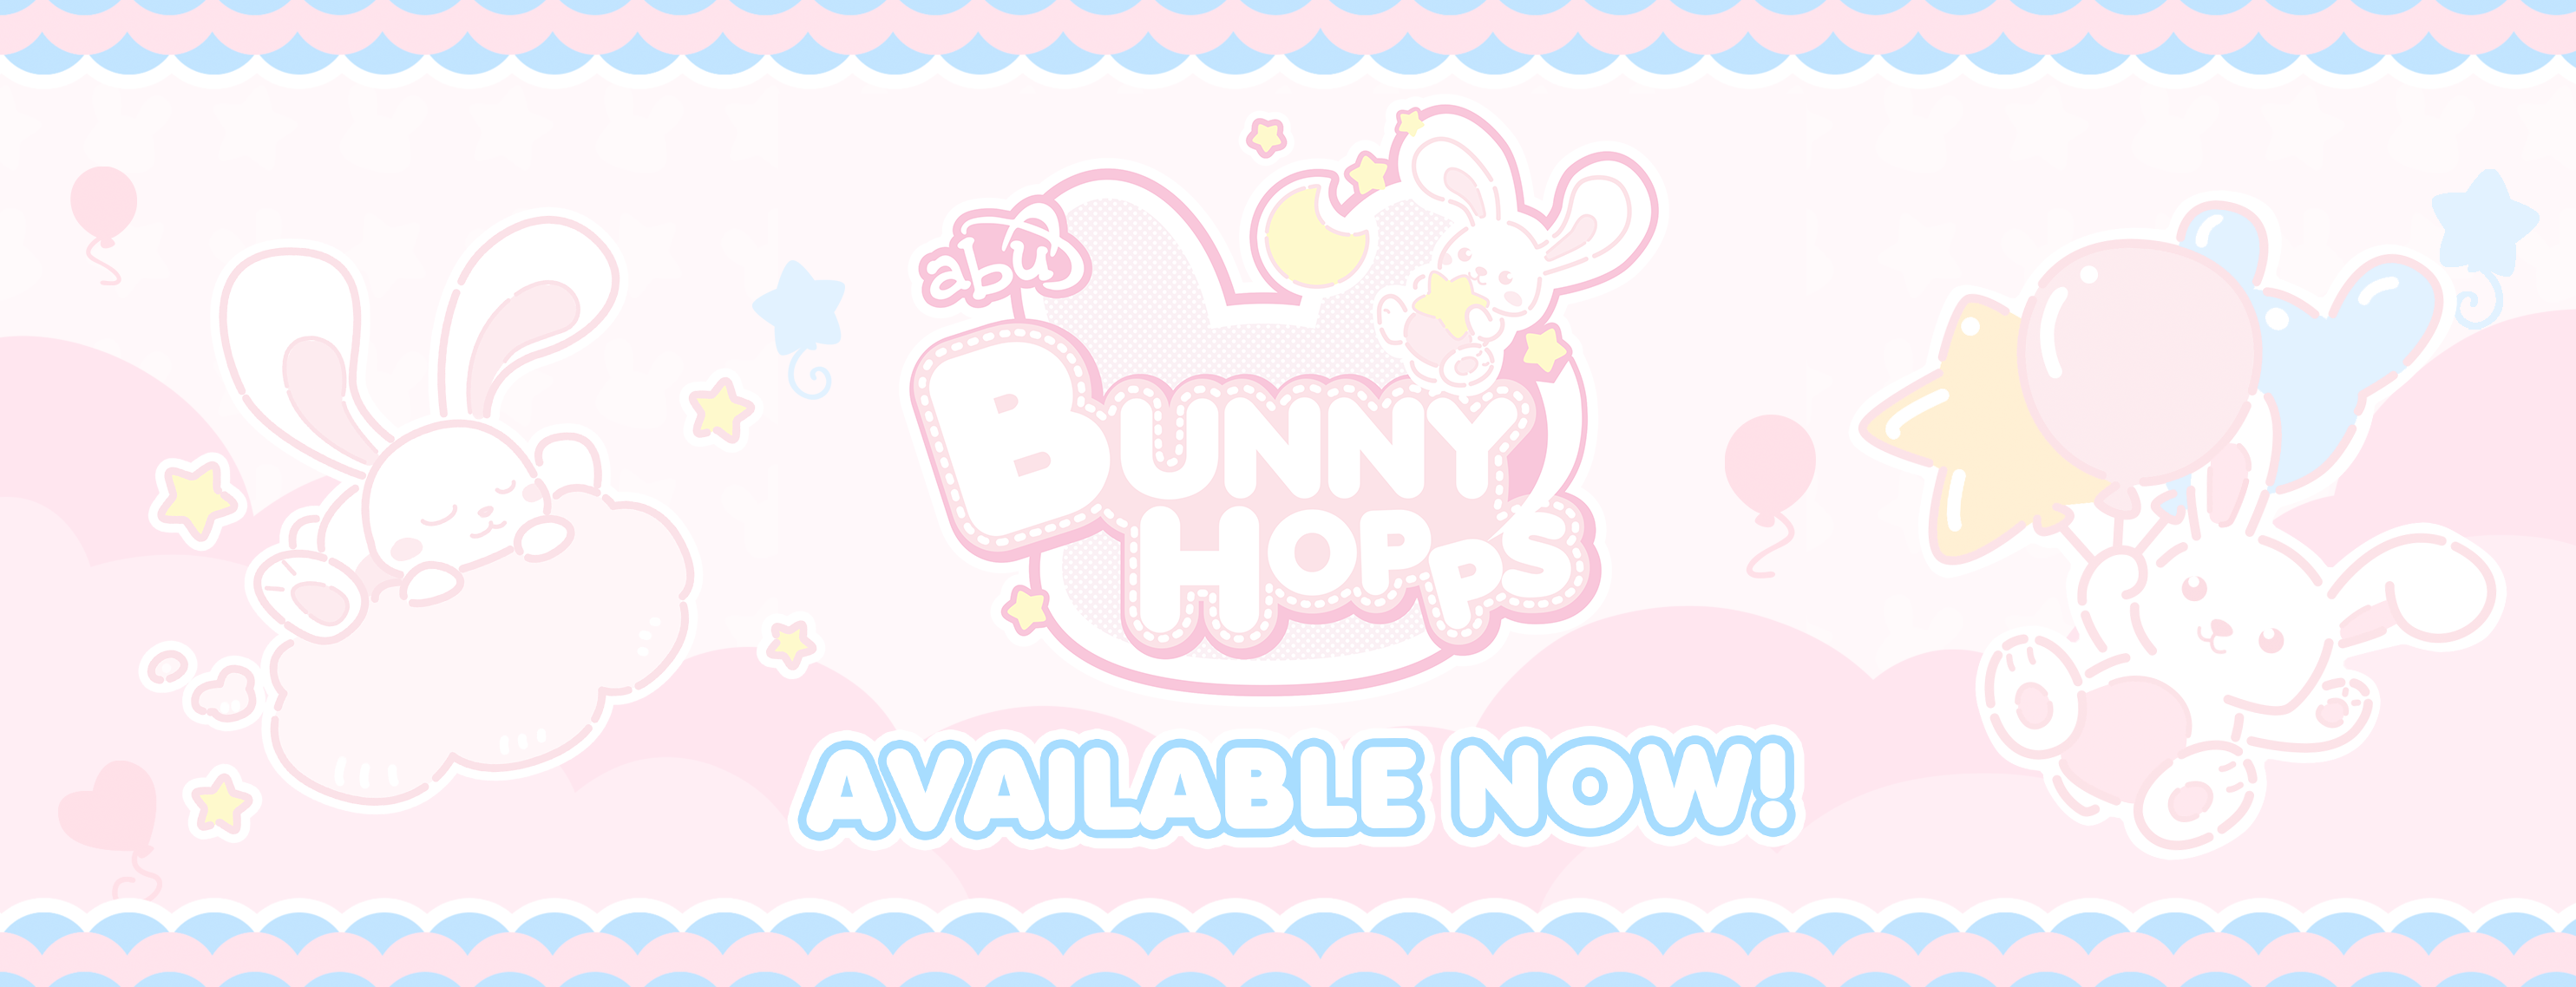 BunnyHopps_Release_Banner_Website